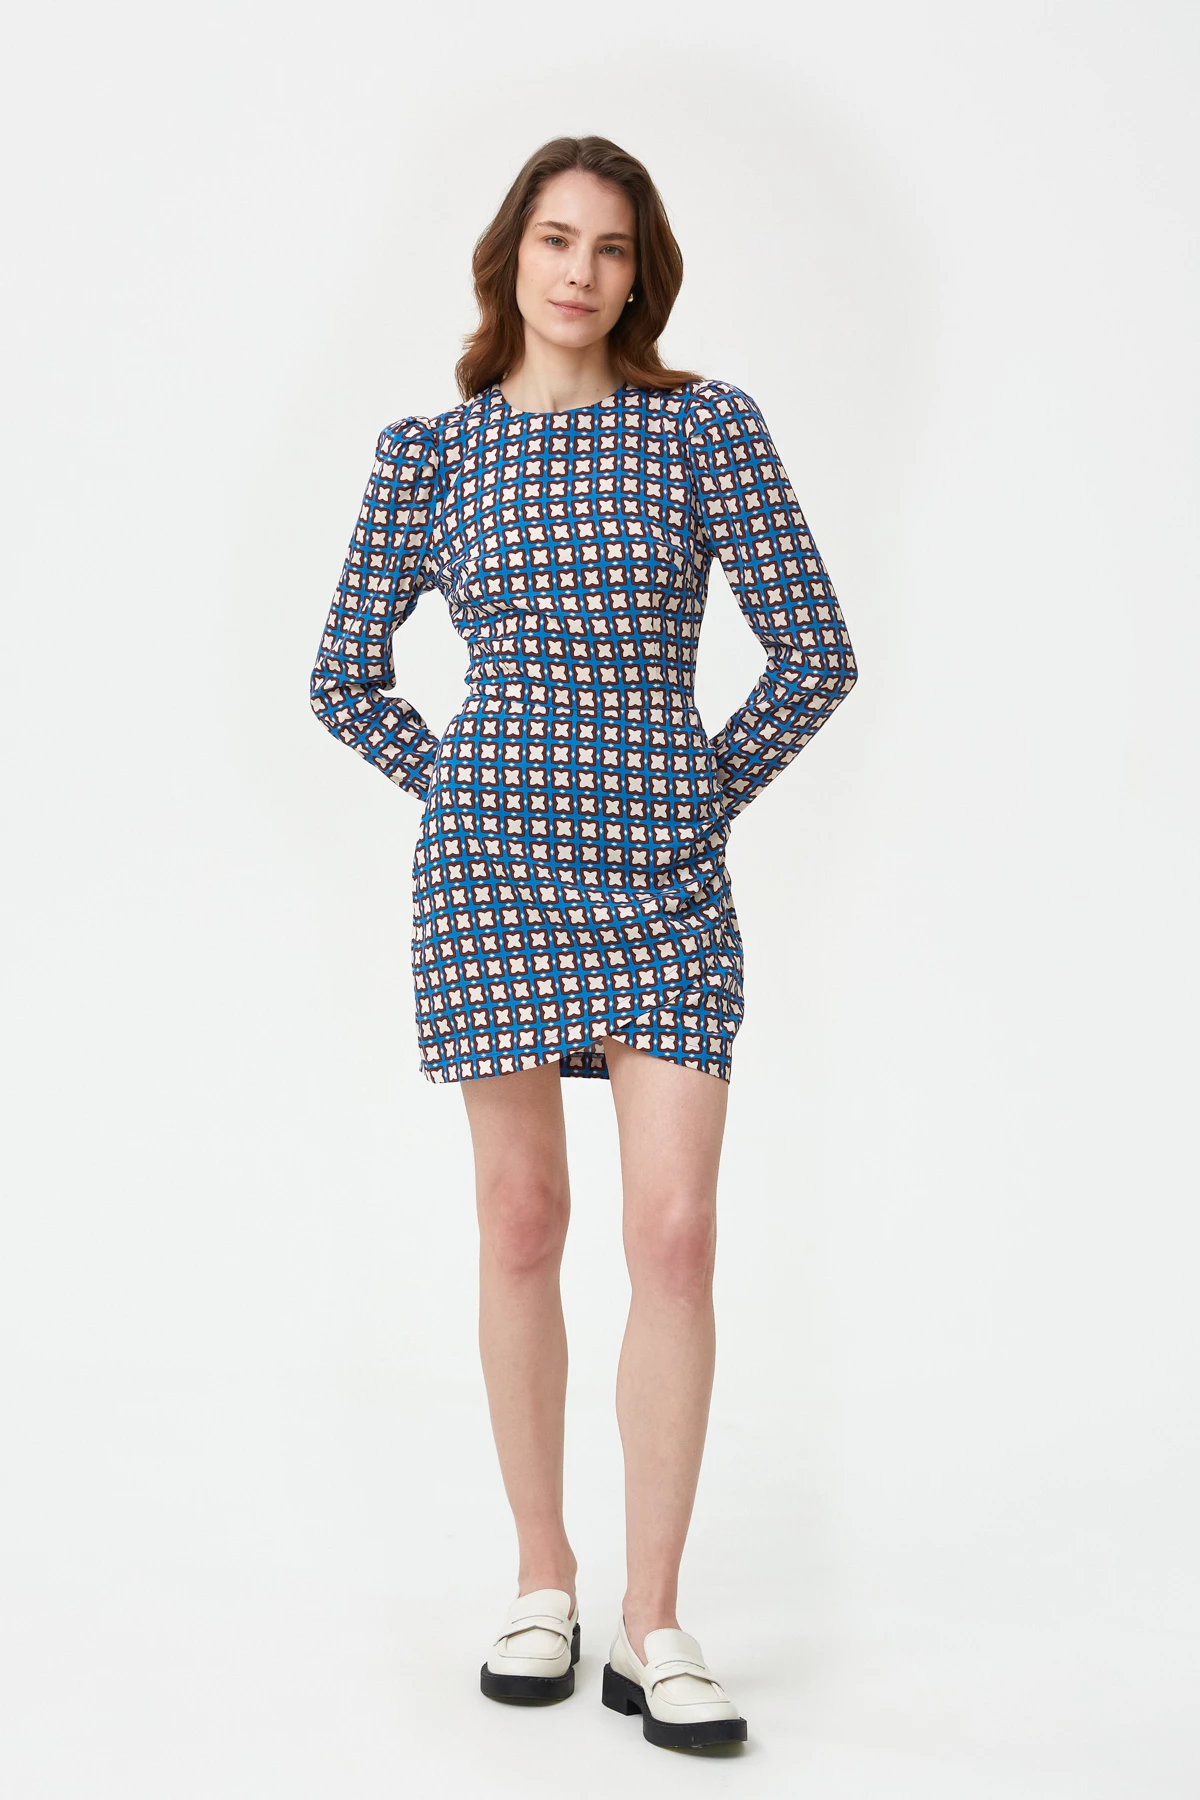 Blue short bodycon tencel dress with geometric print, photo 2